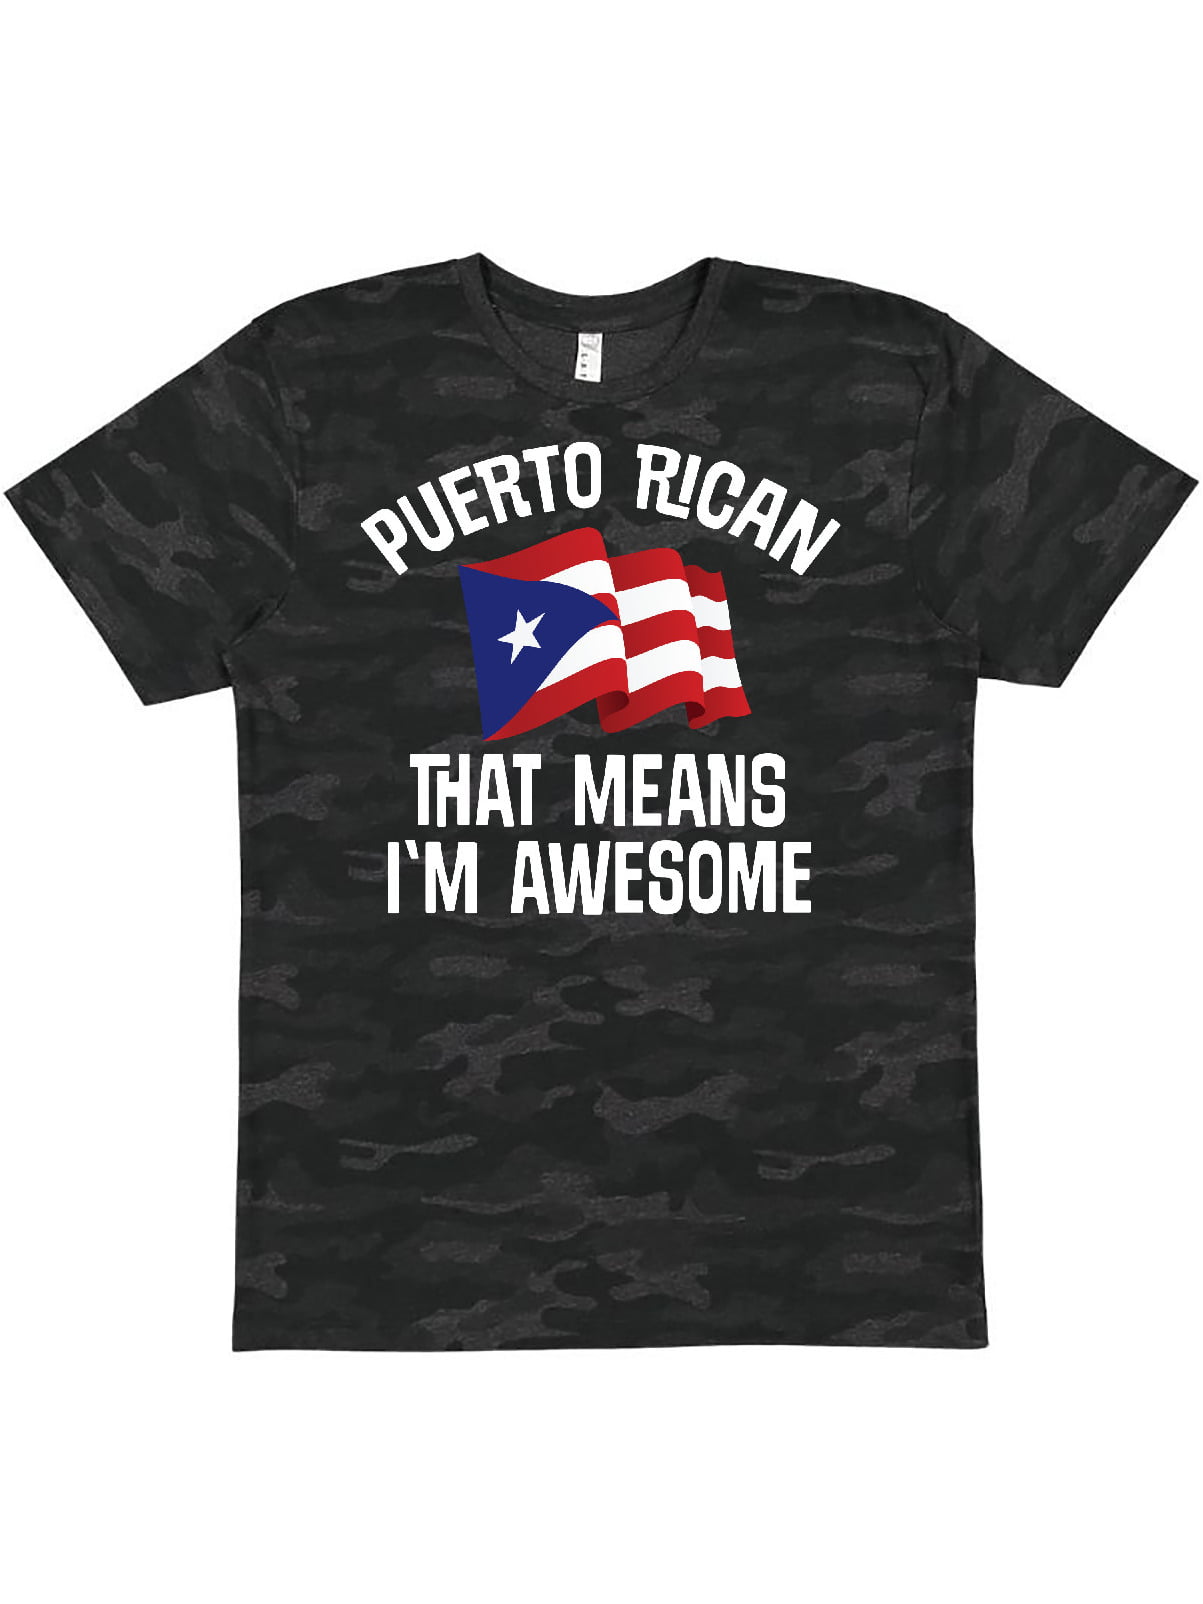 Little Girls Puerto Rico Flag Snowboard ComfortSoft Long Sleeve T-Shirt